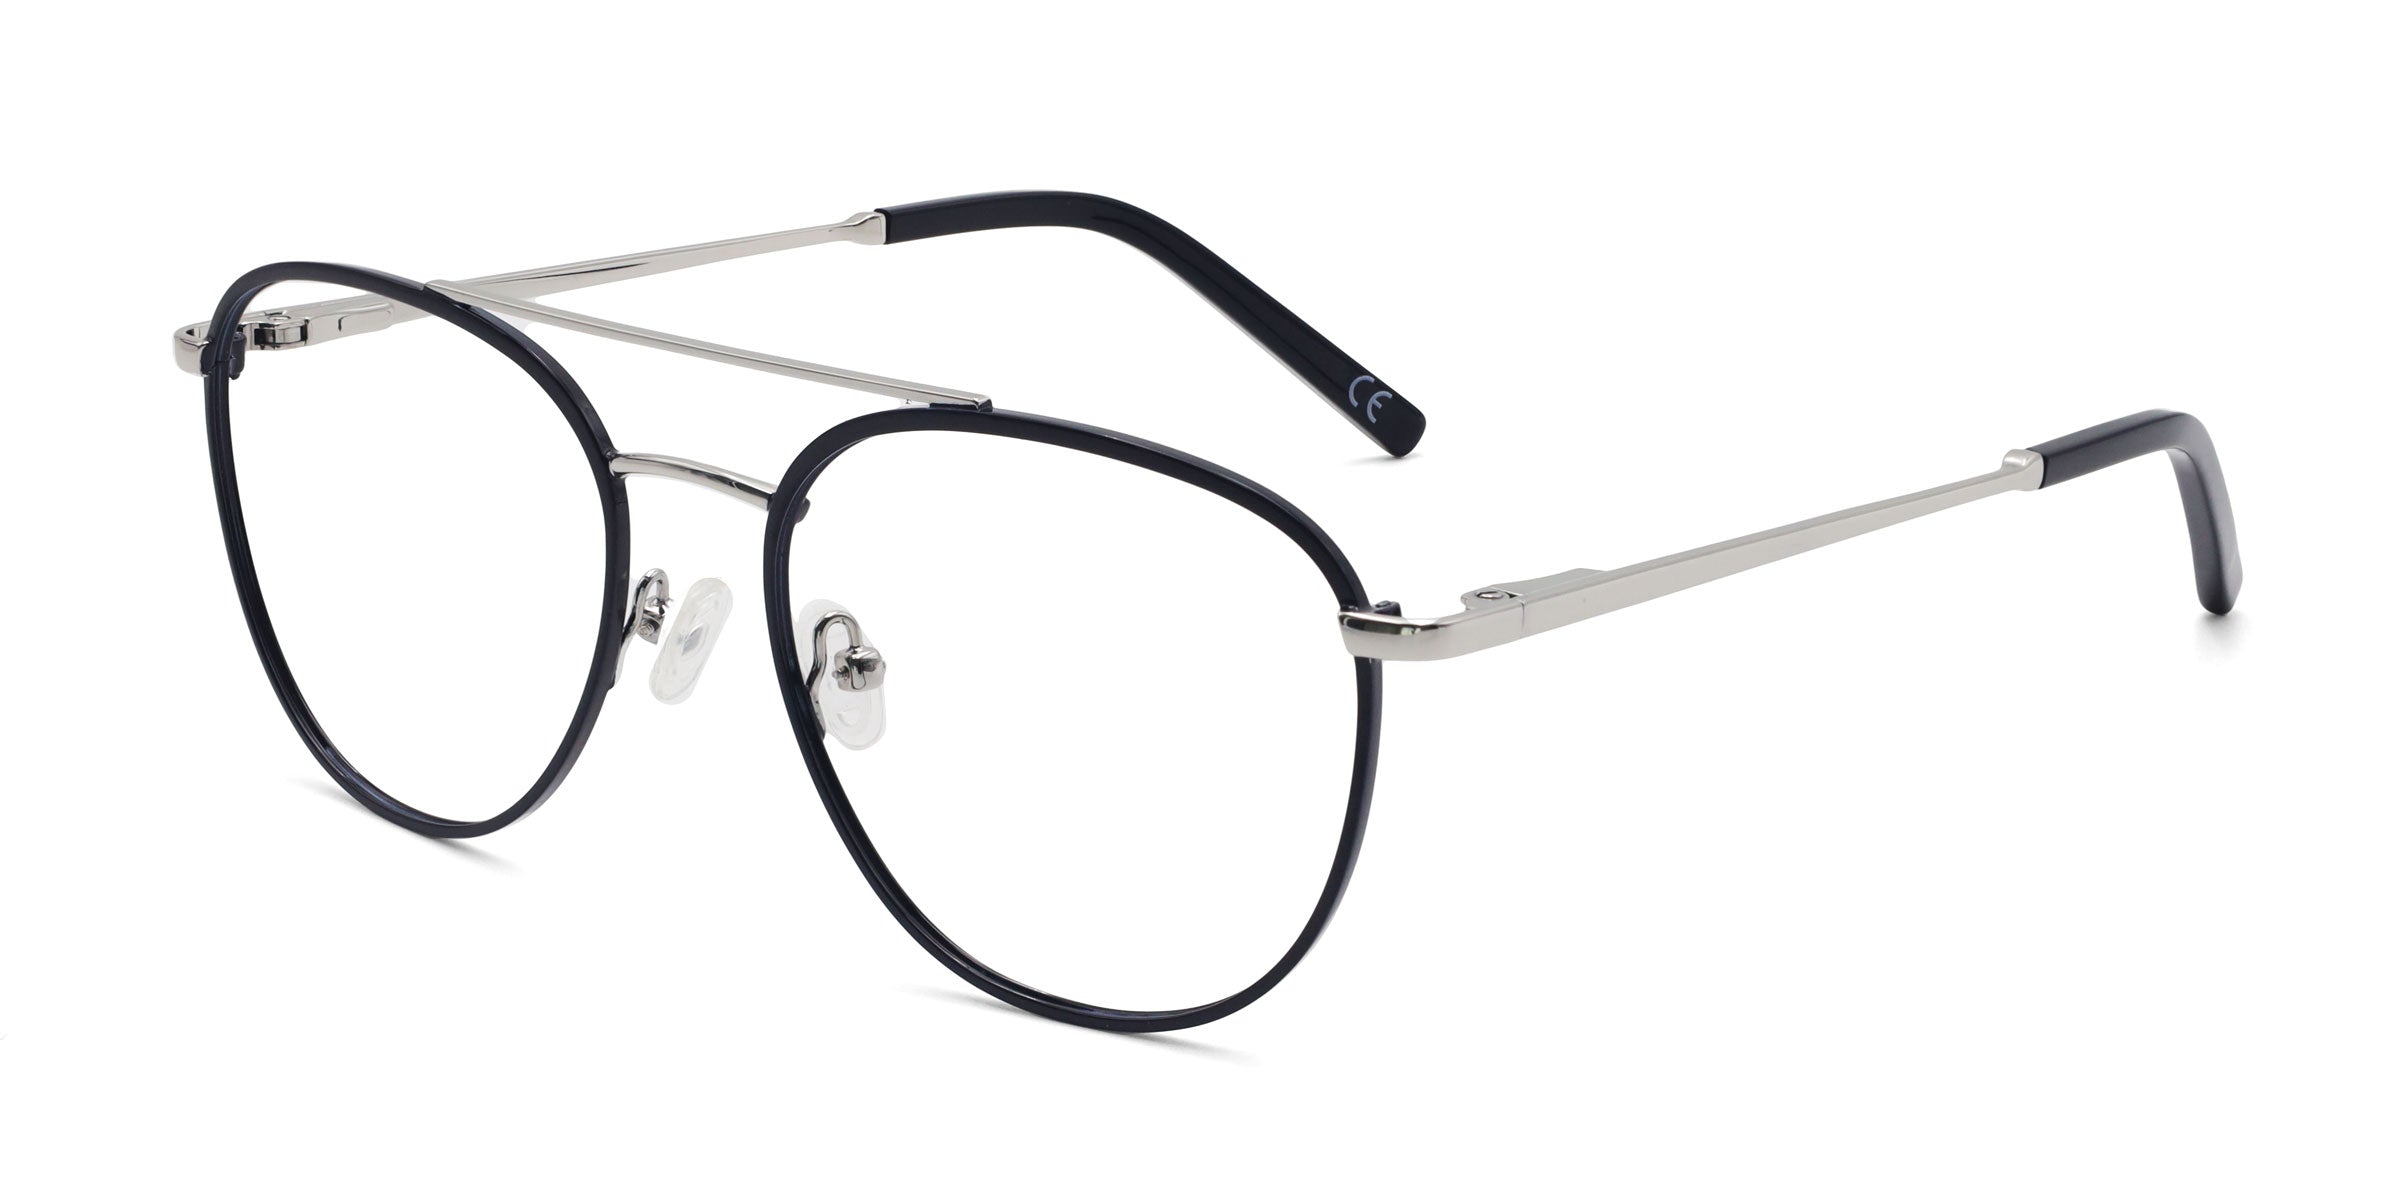 Kind Aviator Black eyeglasses frames angled view